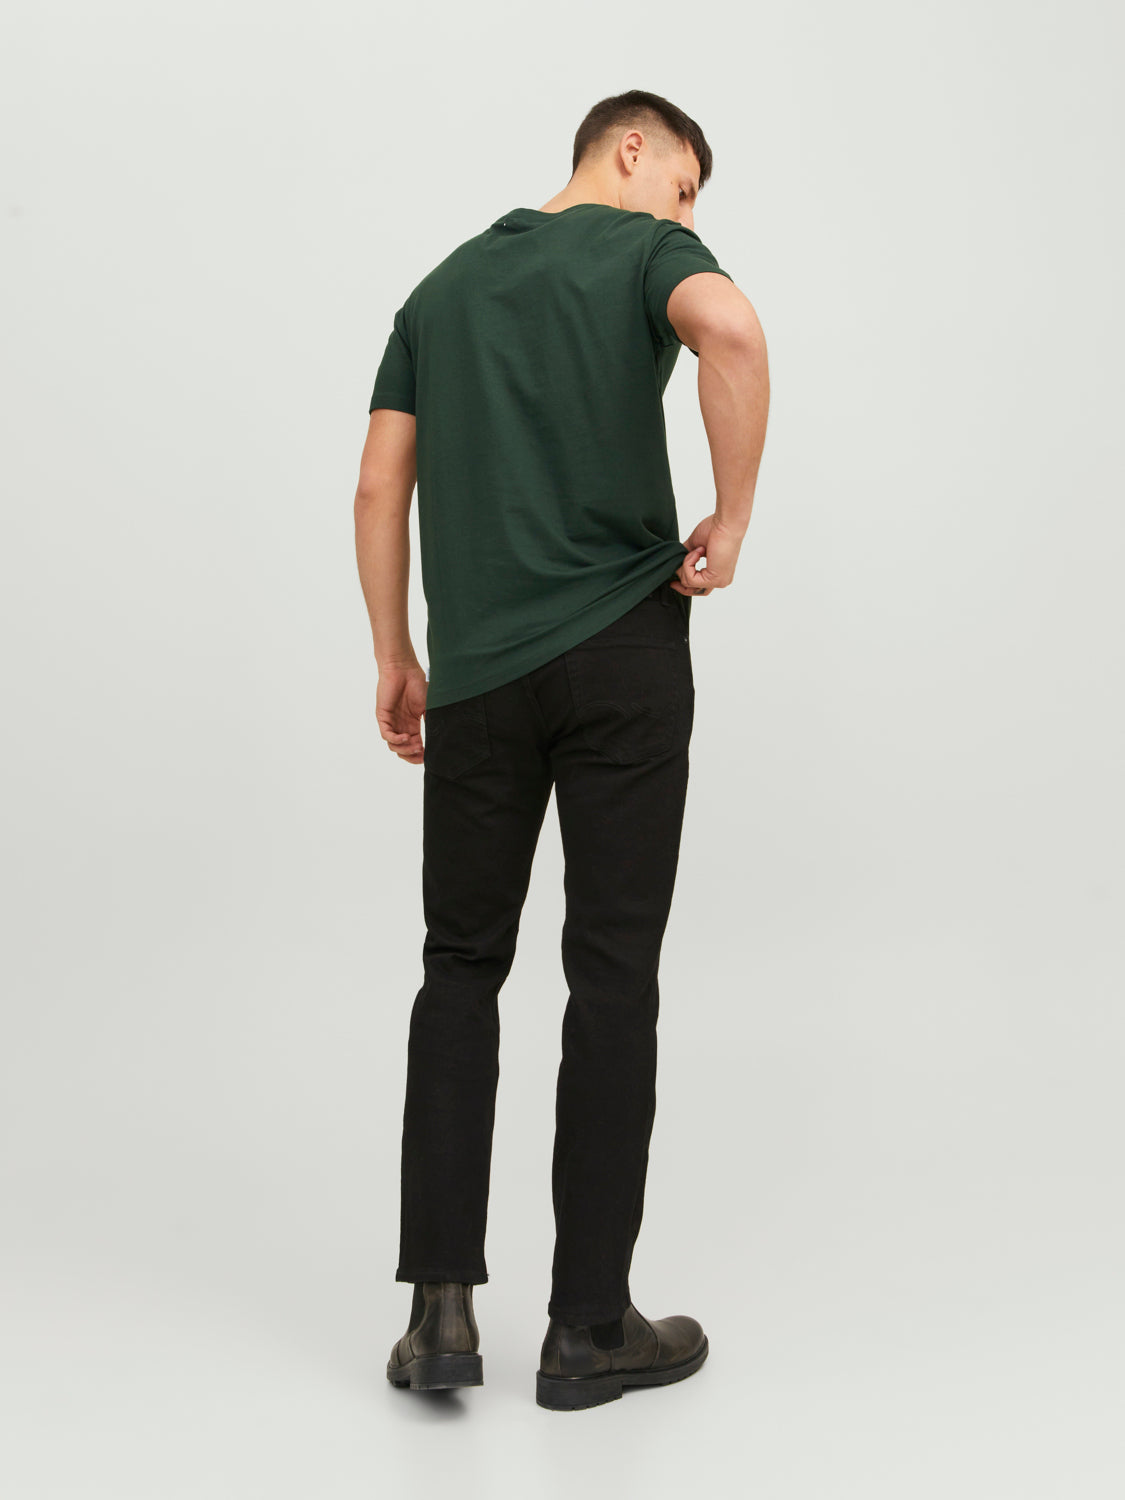 Camiseta básica de manga corta verde oscuro - JJEORGANIC